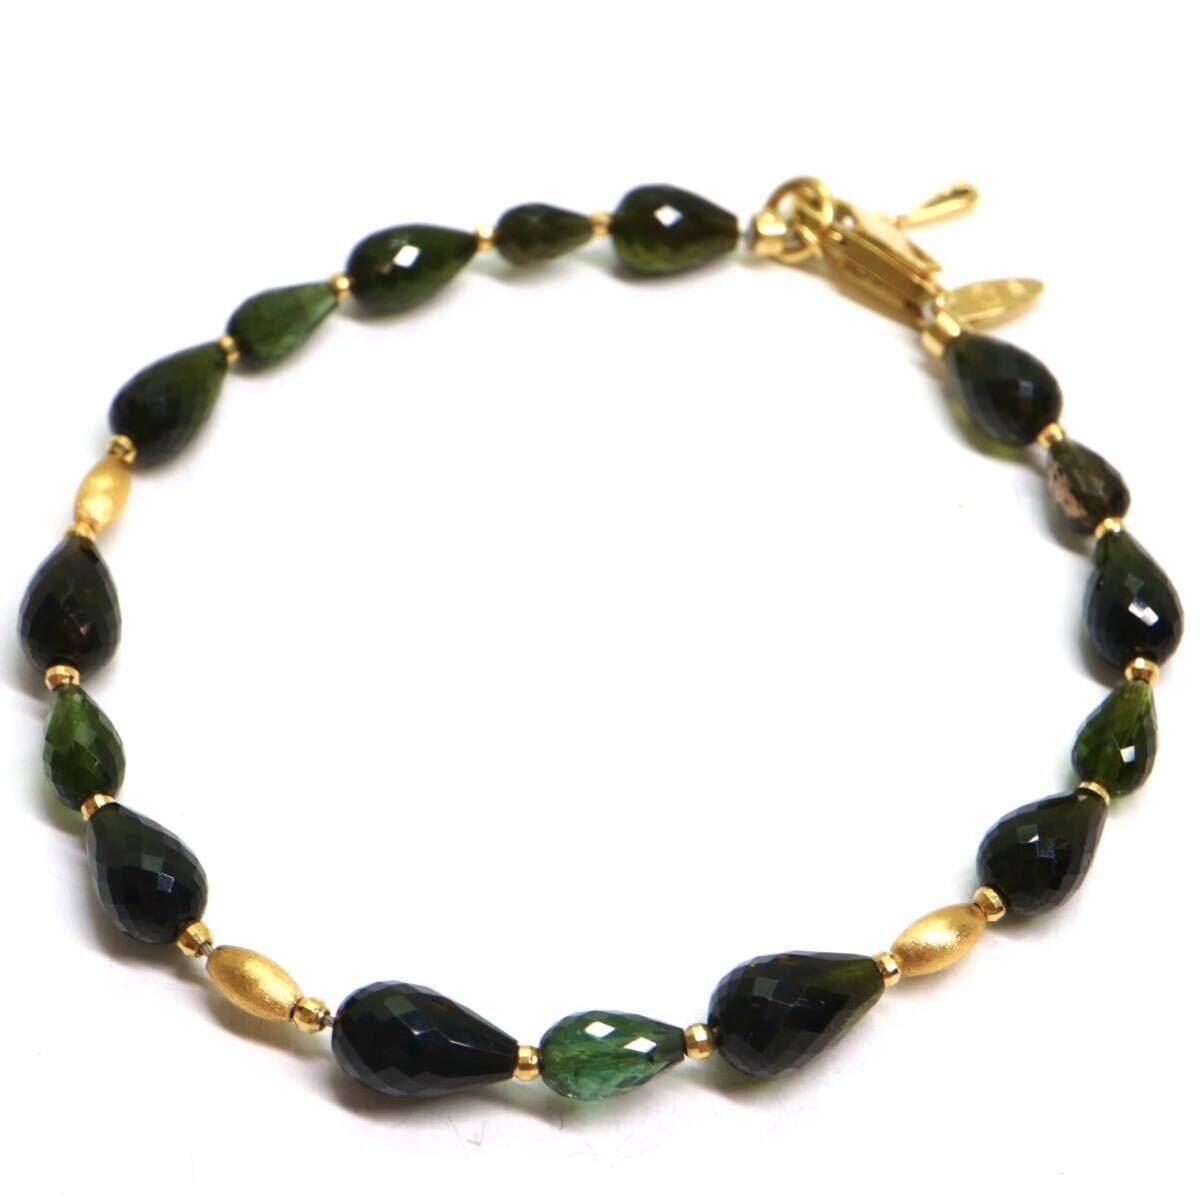 Ambrose(アンブローズ)《K18 天然トルマリンブレスレット》A 約9.8g 約20cm green tourmaline bracelet ジュエリー jewelry EA6/EB0_画像1